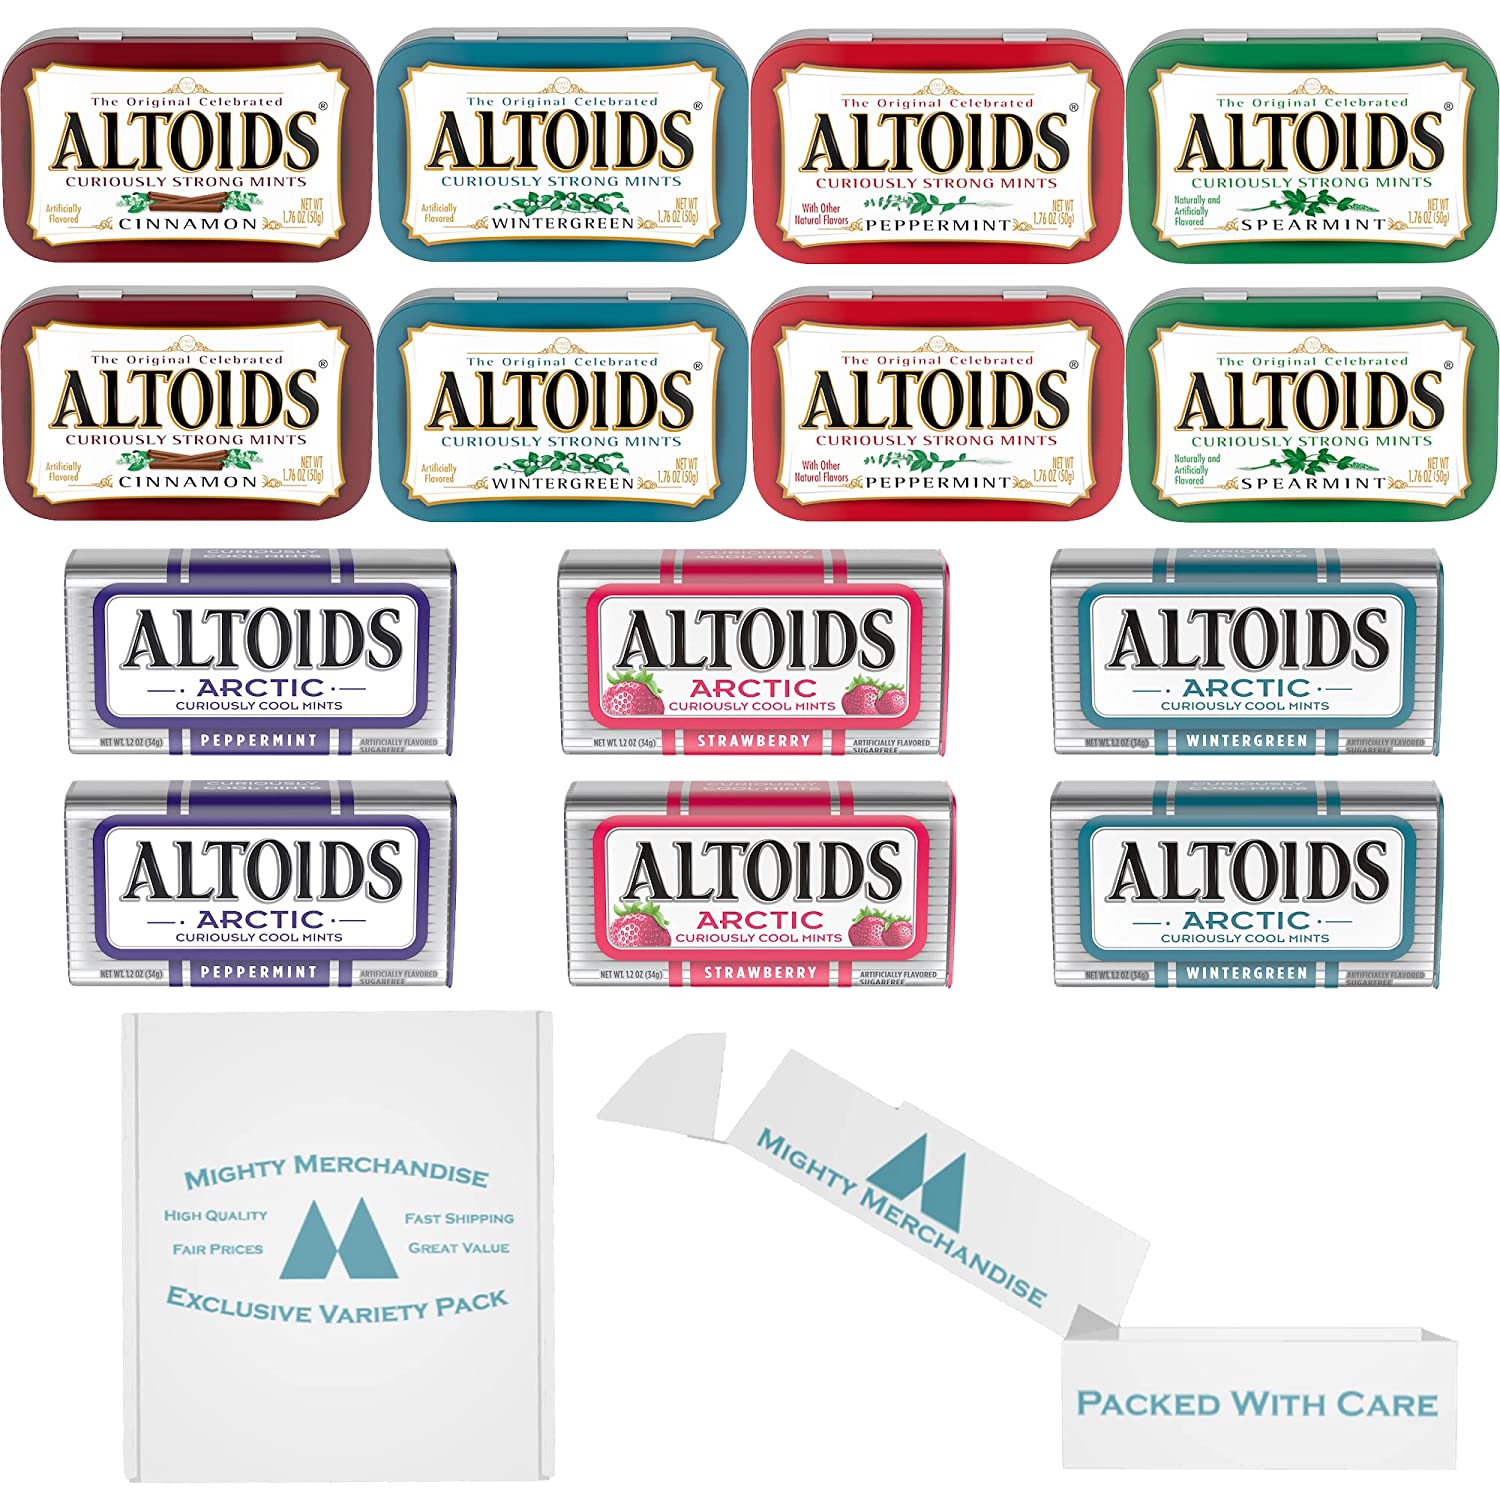 Altoids Curiously Strong Mints Variety Pack of 4-2 Each of Altoids Peppermint and Altoids Cinnamon Mints - Favorite Flavors of Altoids Breath Mints